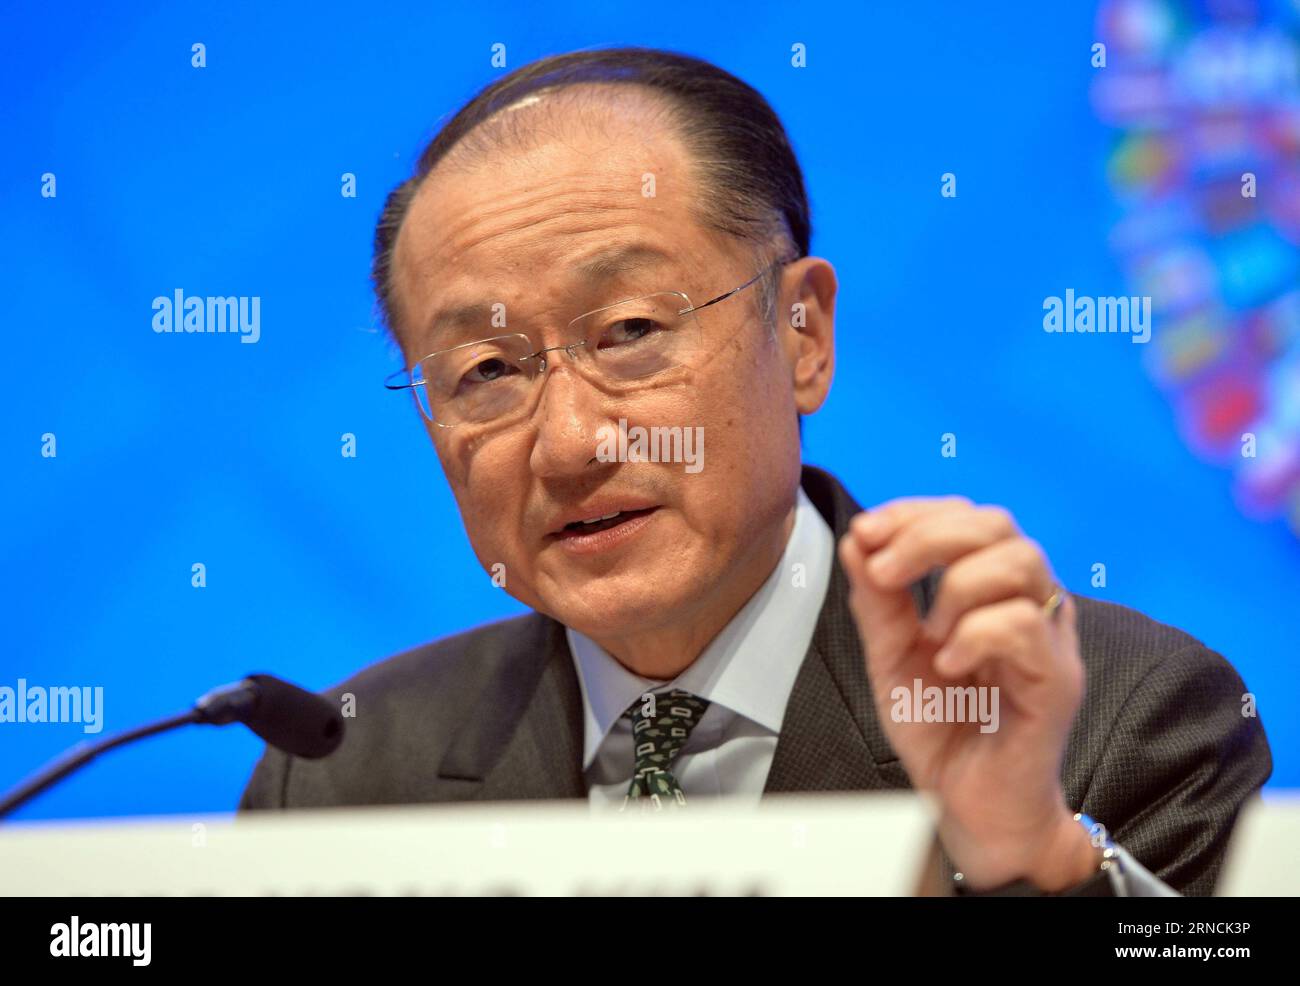 (160415) -- WASHINGTON D.C., April 14, 2016 -- World Bank President Jim Yong Kim speaks at a press conference during the IMF-World Bank 2016 Spring Meetings in Washington D.C., capital of the United States, April 14, 2016. ) (djj) U.S.-WASHINGTON D.C.-WORLD BANK-PRESS CONFERENCE BaoxDandan PUBLICATIONxNOTxINxCHN   160415 Washington D C April 14 2016 World Bank President Jim Yong Kim Speaks AT a Press Conference during The IMF World Bank 2016 Spring Meetings in Washington D C Capital of The United States April 14 2016 djj U S Washington D C World Bank Press Conference baoxdandan PUBLICATIONxNOT Stock Photo